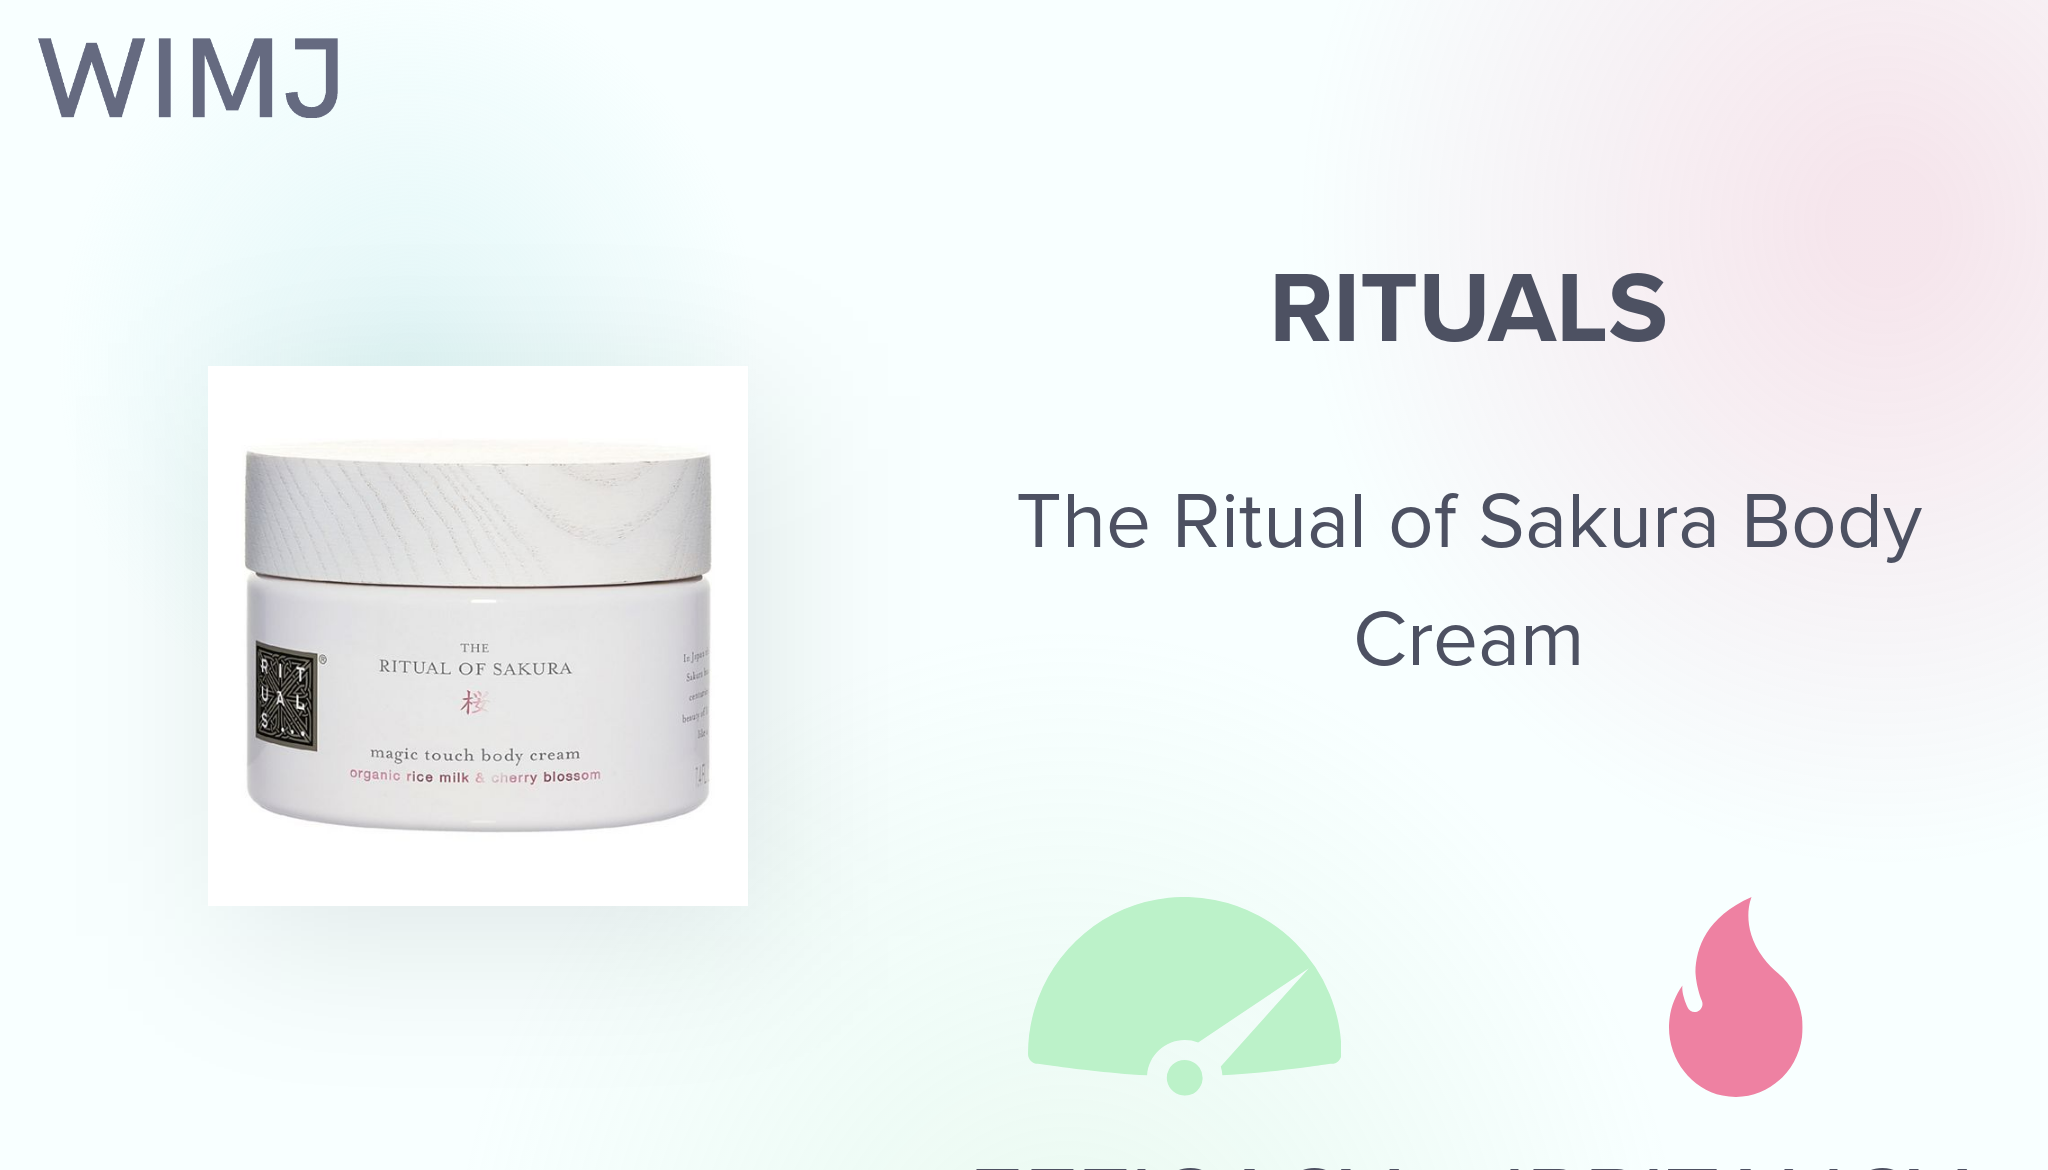 Review: RITUALS - The Ritual of Sakura Body Cream - WIMJ